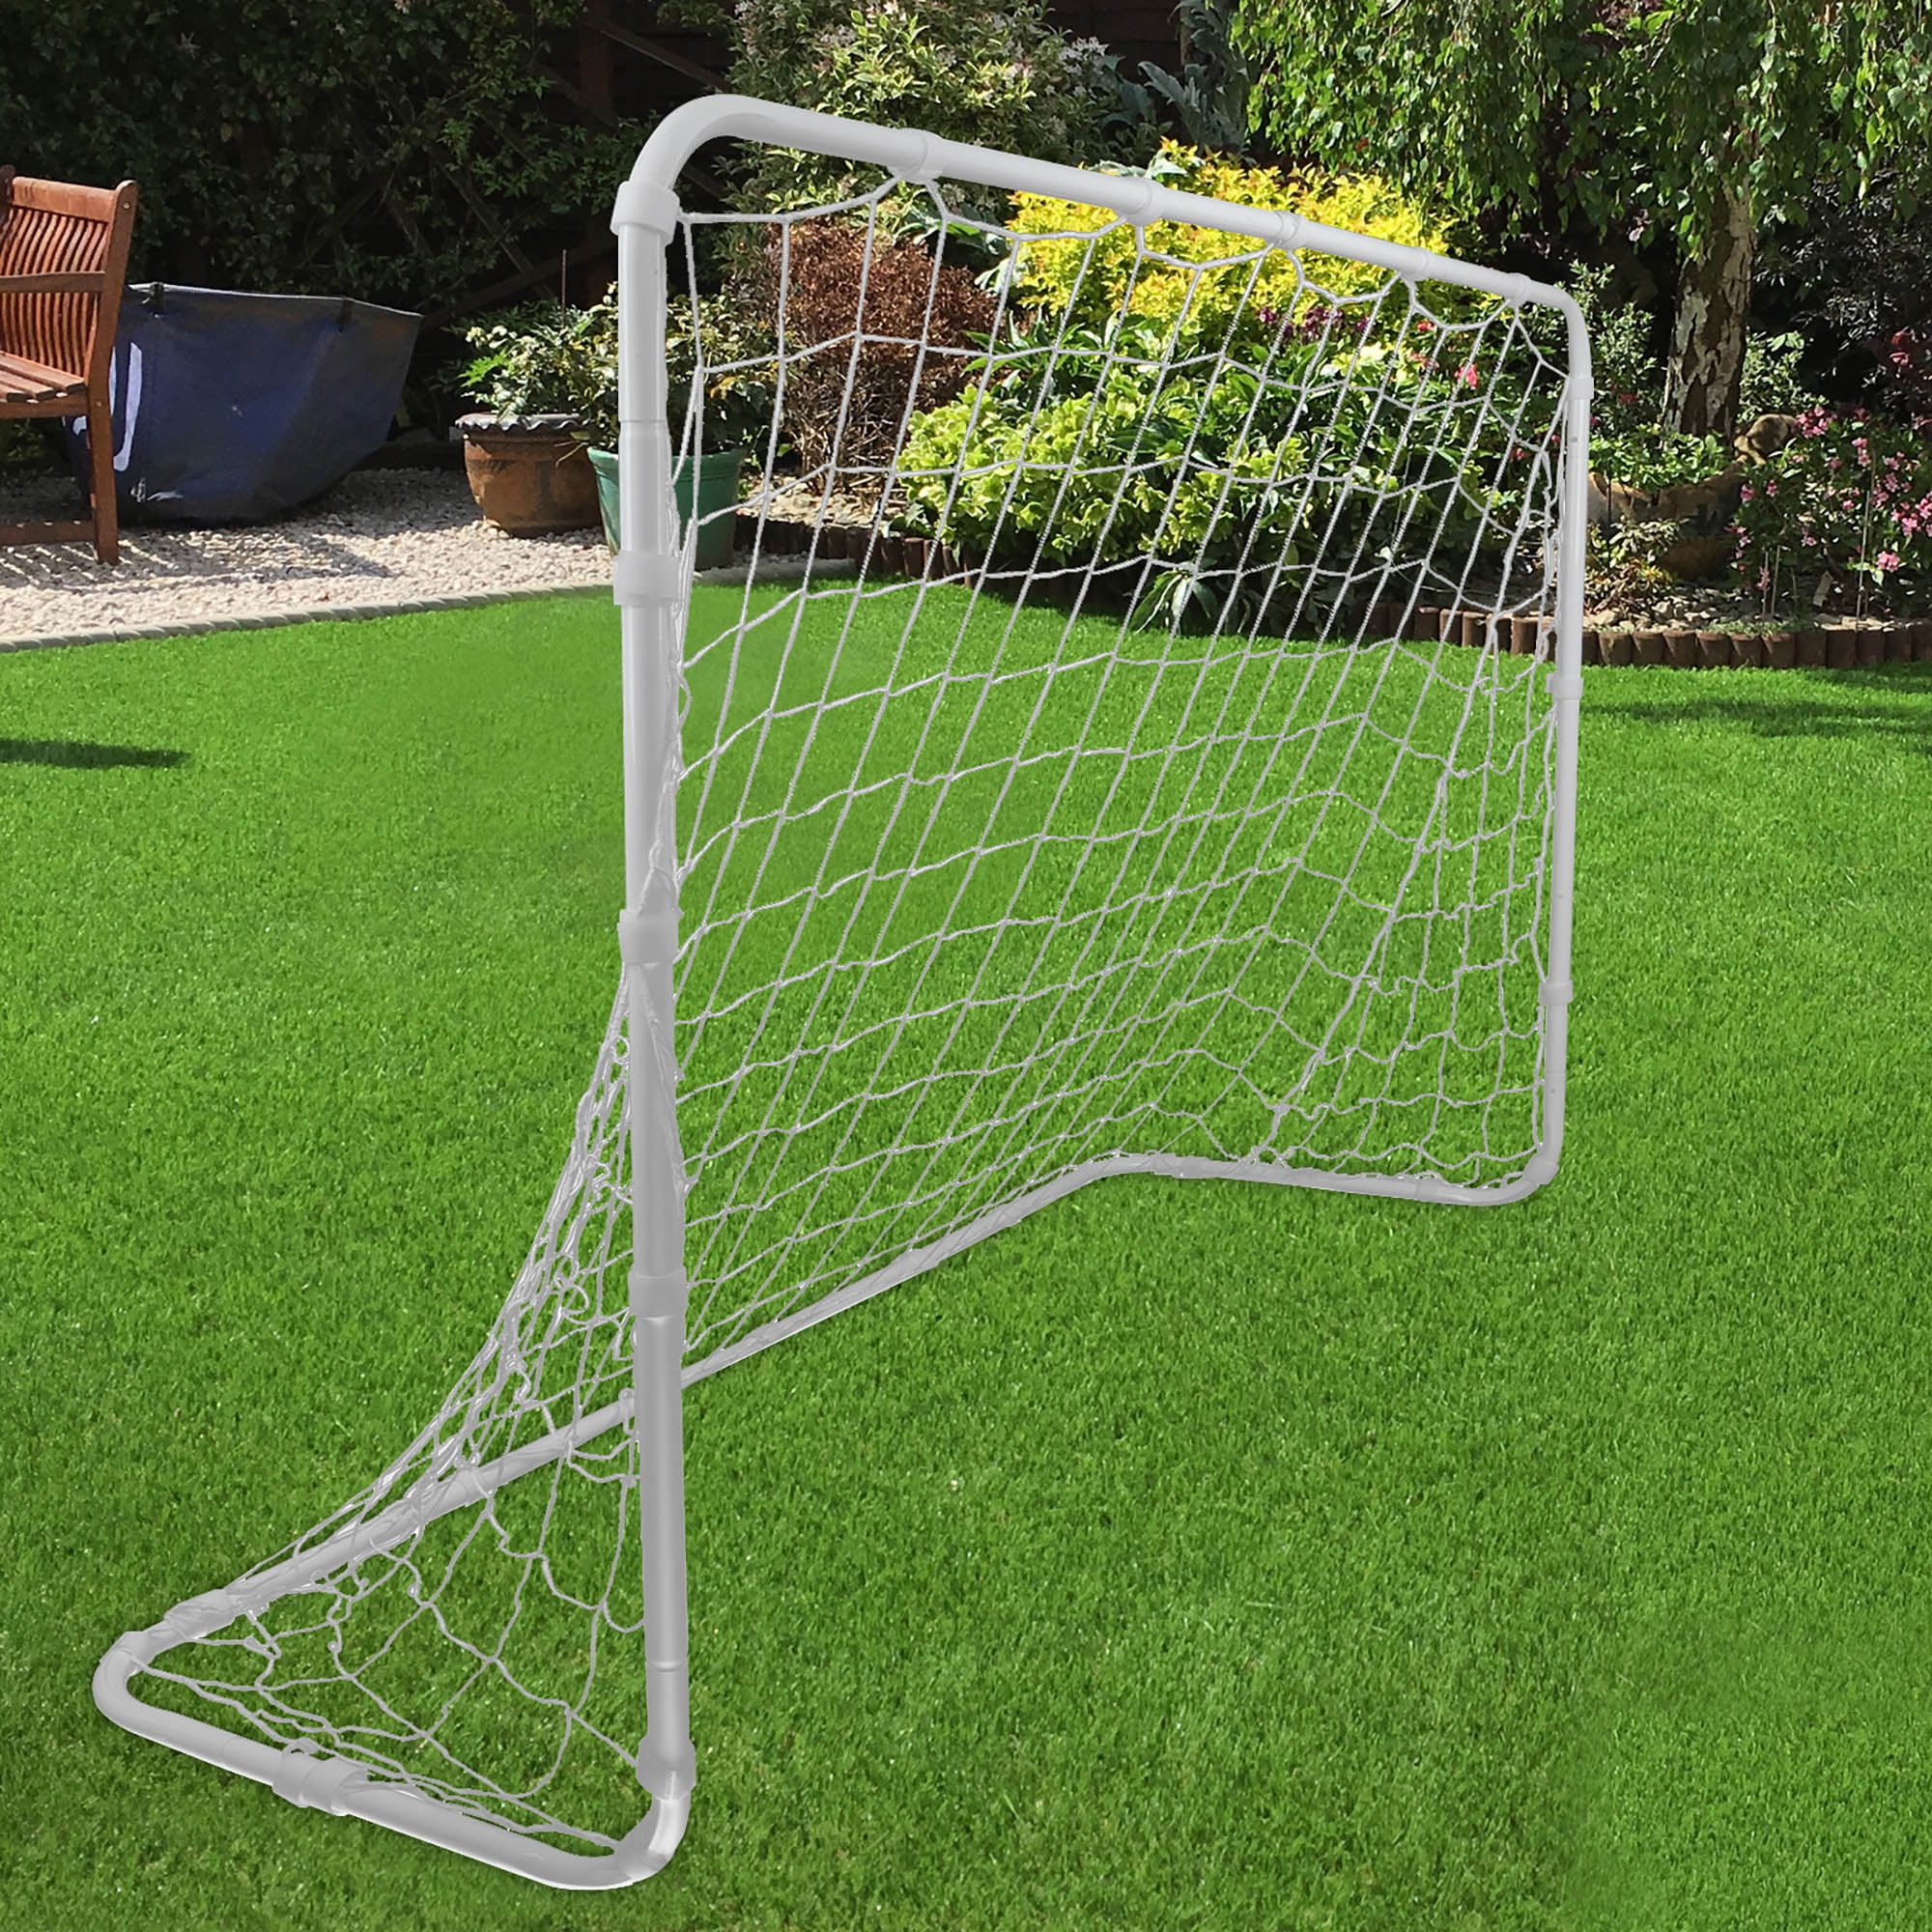 Football Soccer Goal Net Portable Pop-up Target Practice Outdoor Sports w/ Bag 